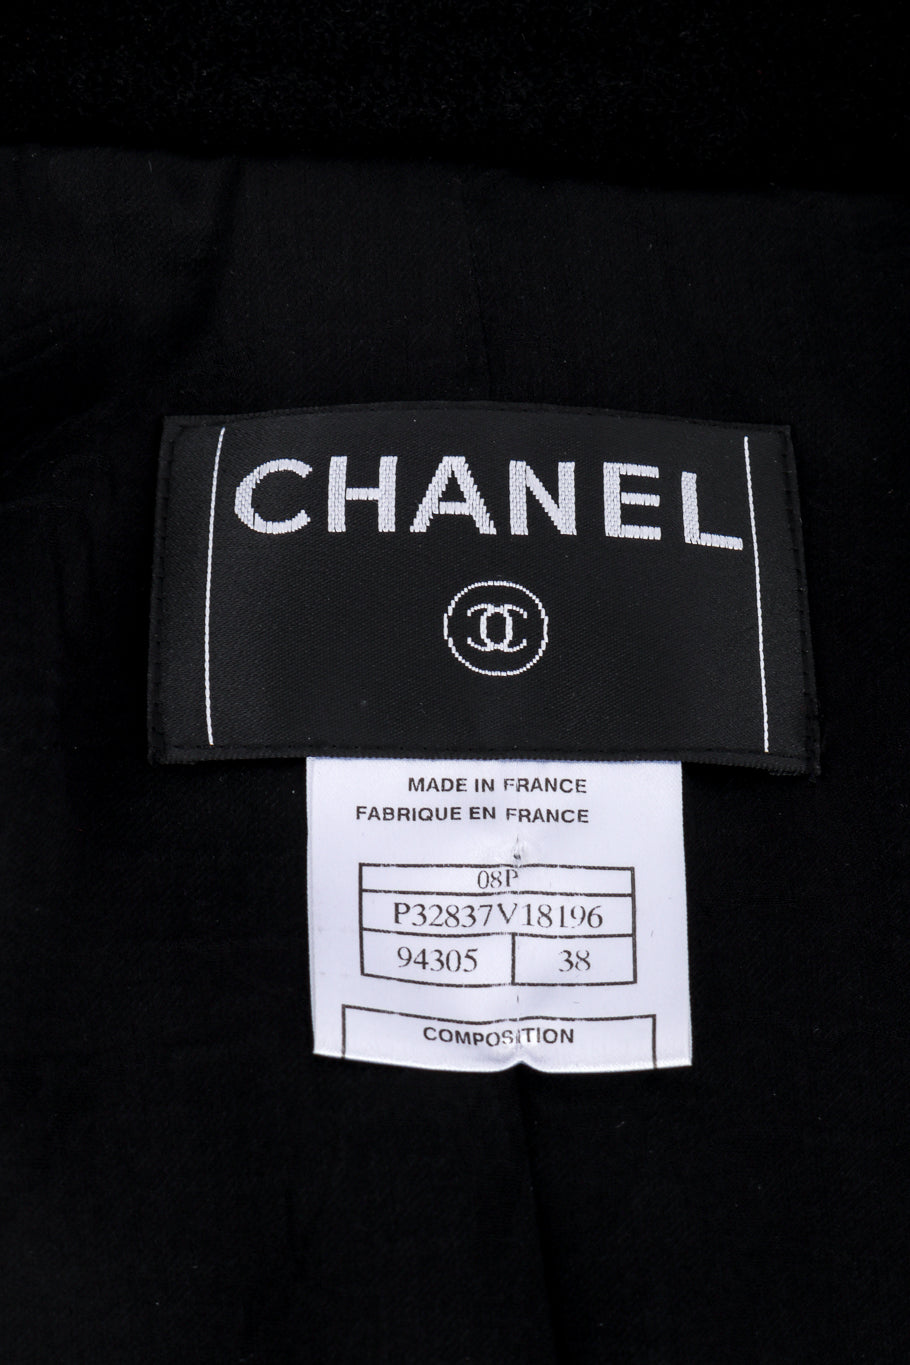 Chanel 2008 S Woven Stitch Trim Jacket signature label @recessla